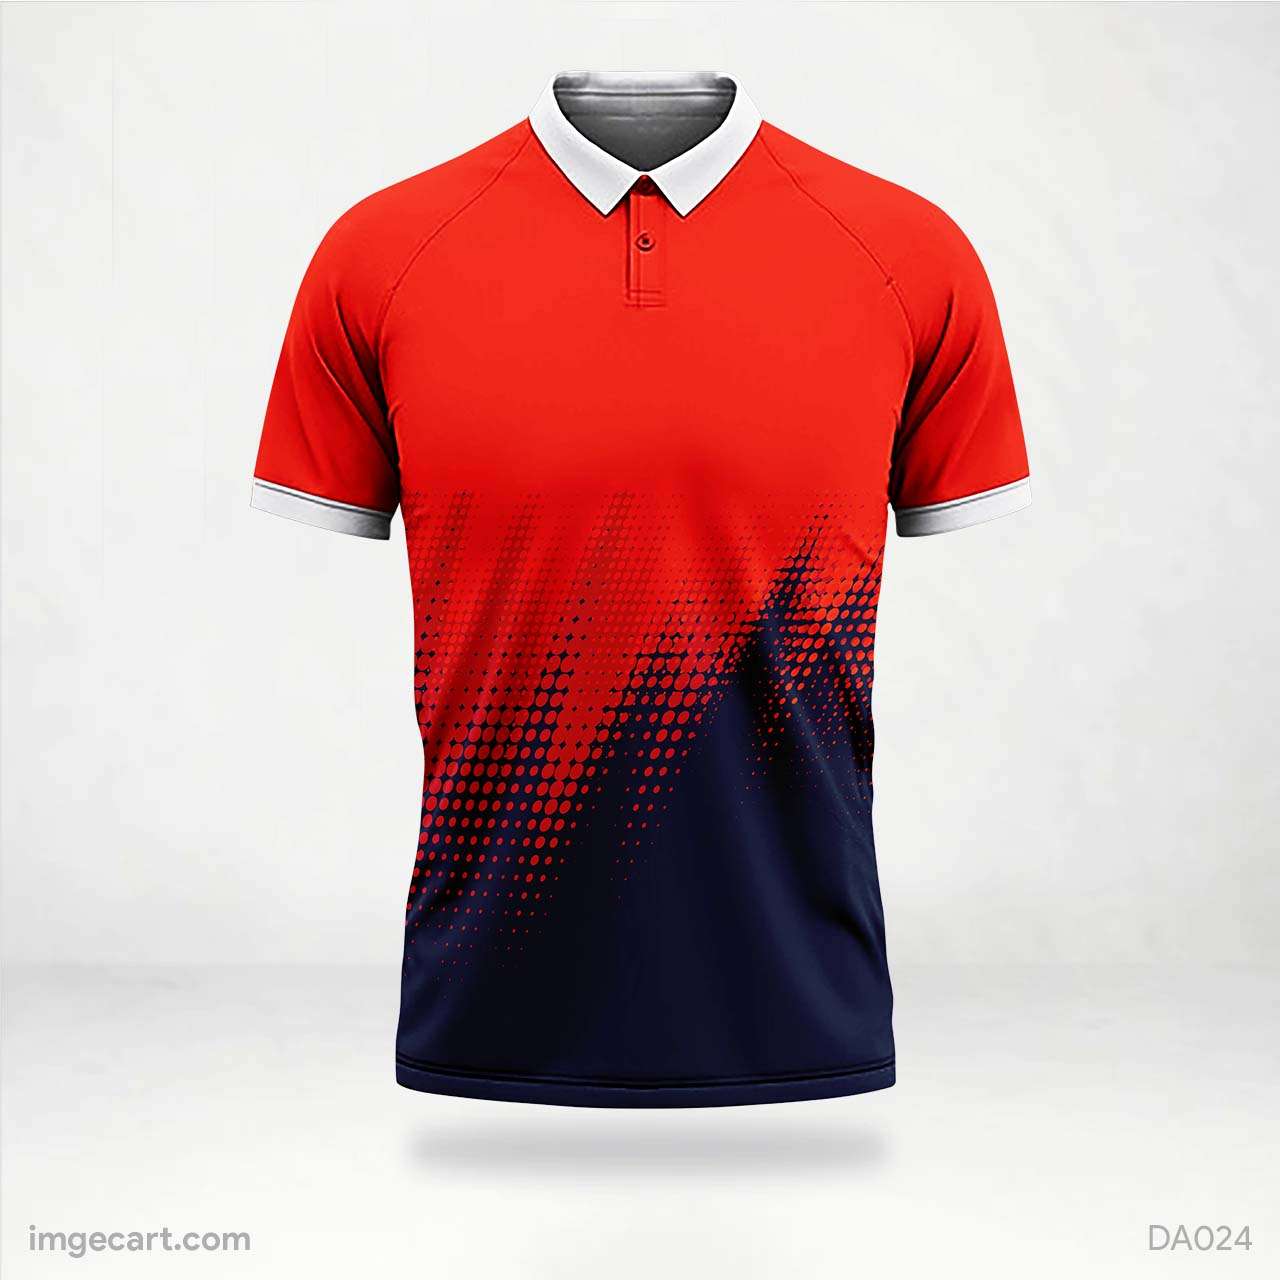 Cricket Jersey Design Red and Blue gradient - imgecart